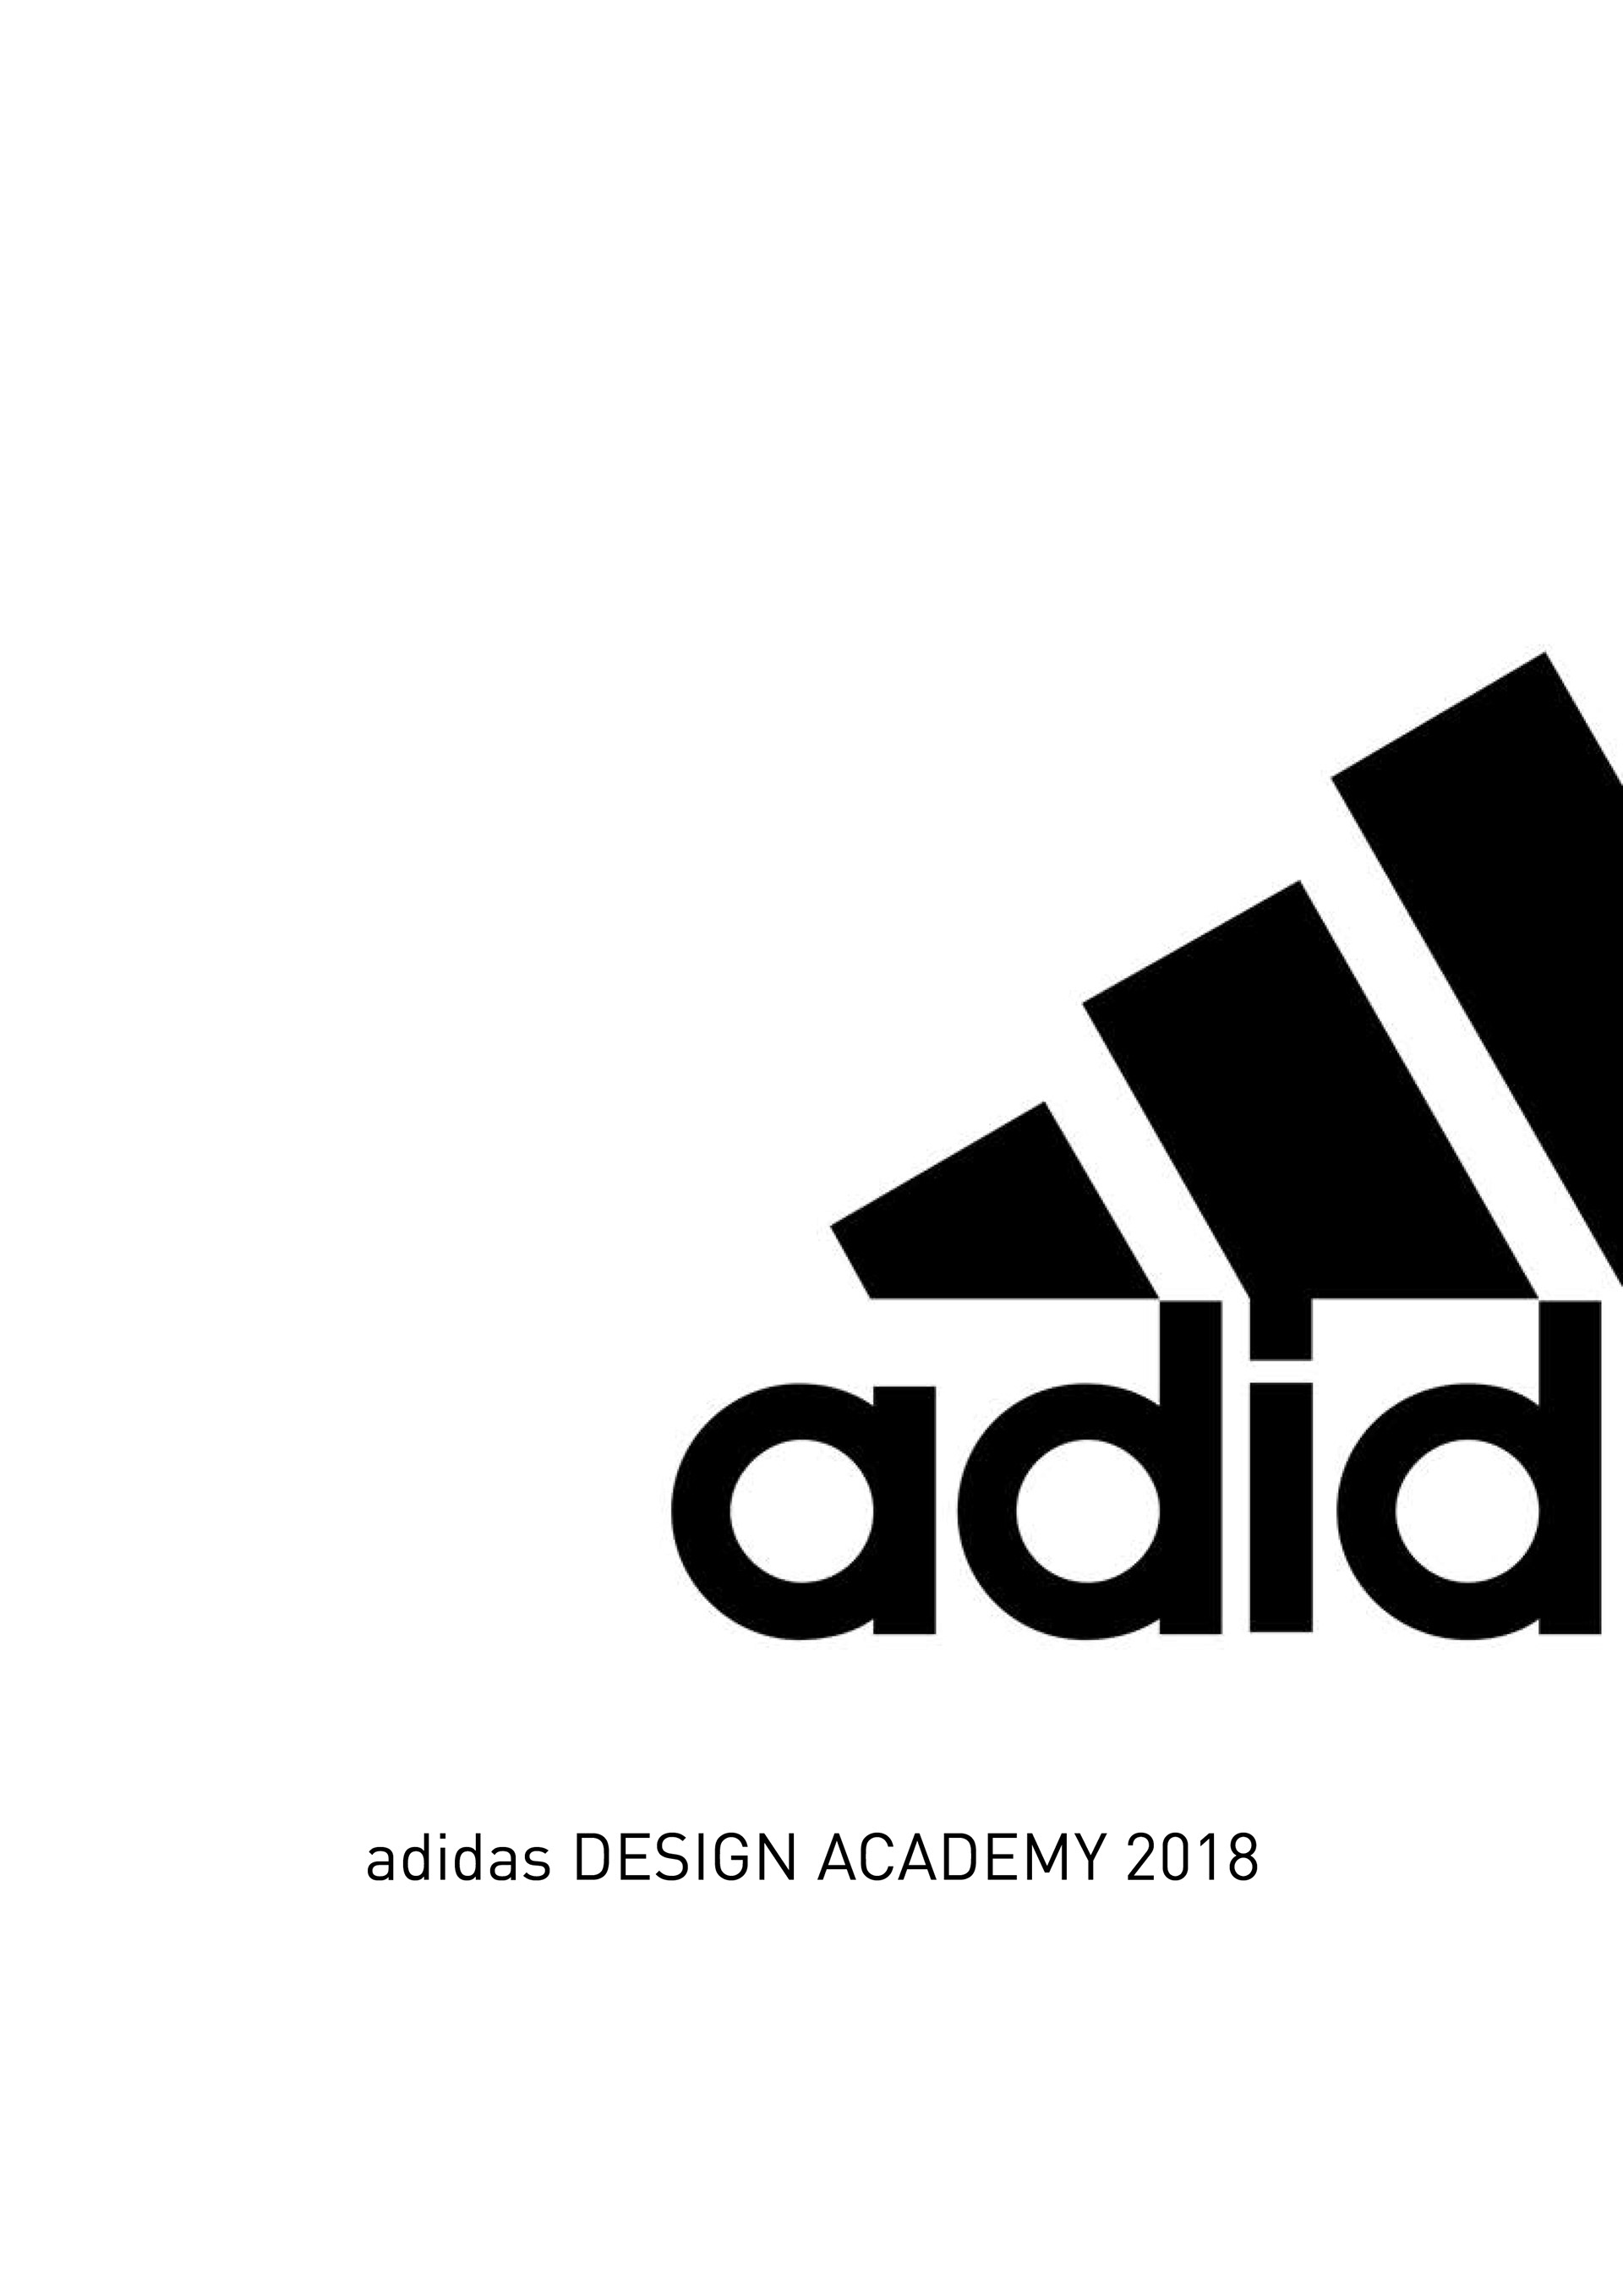 adidas design academy 2018